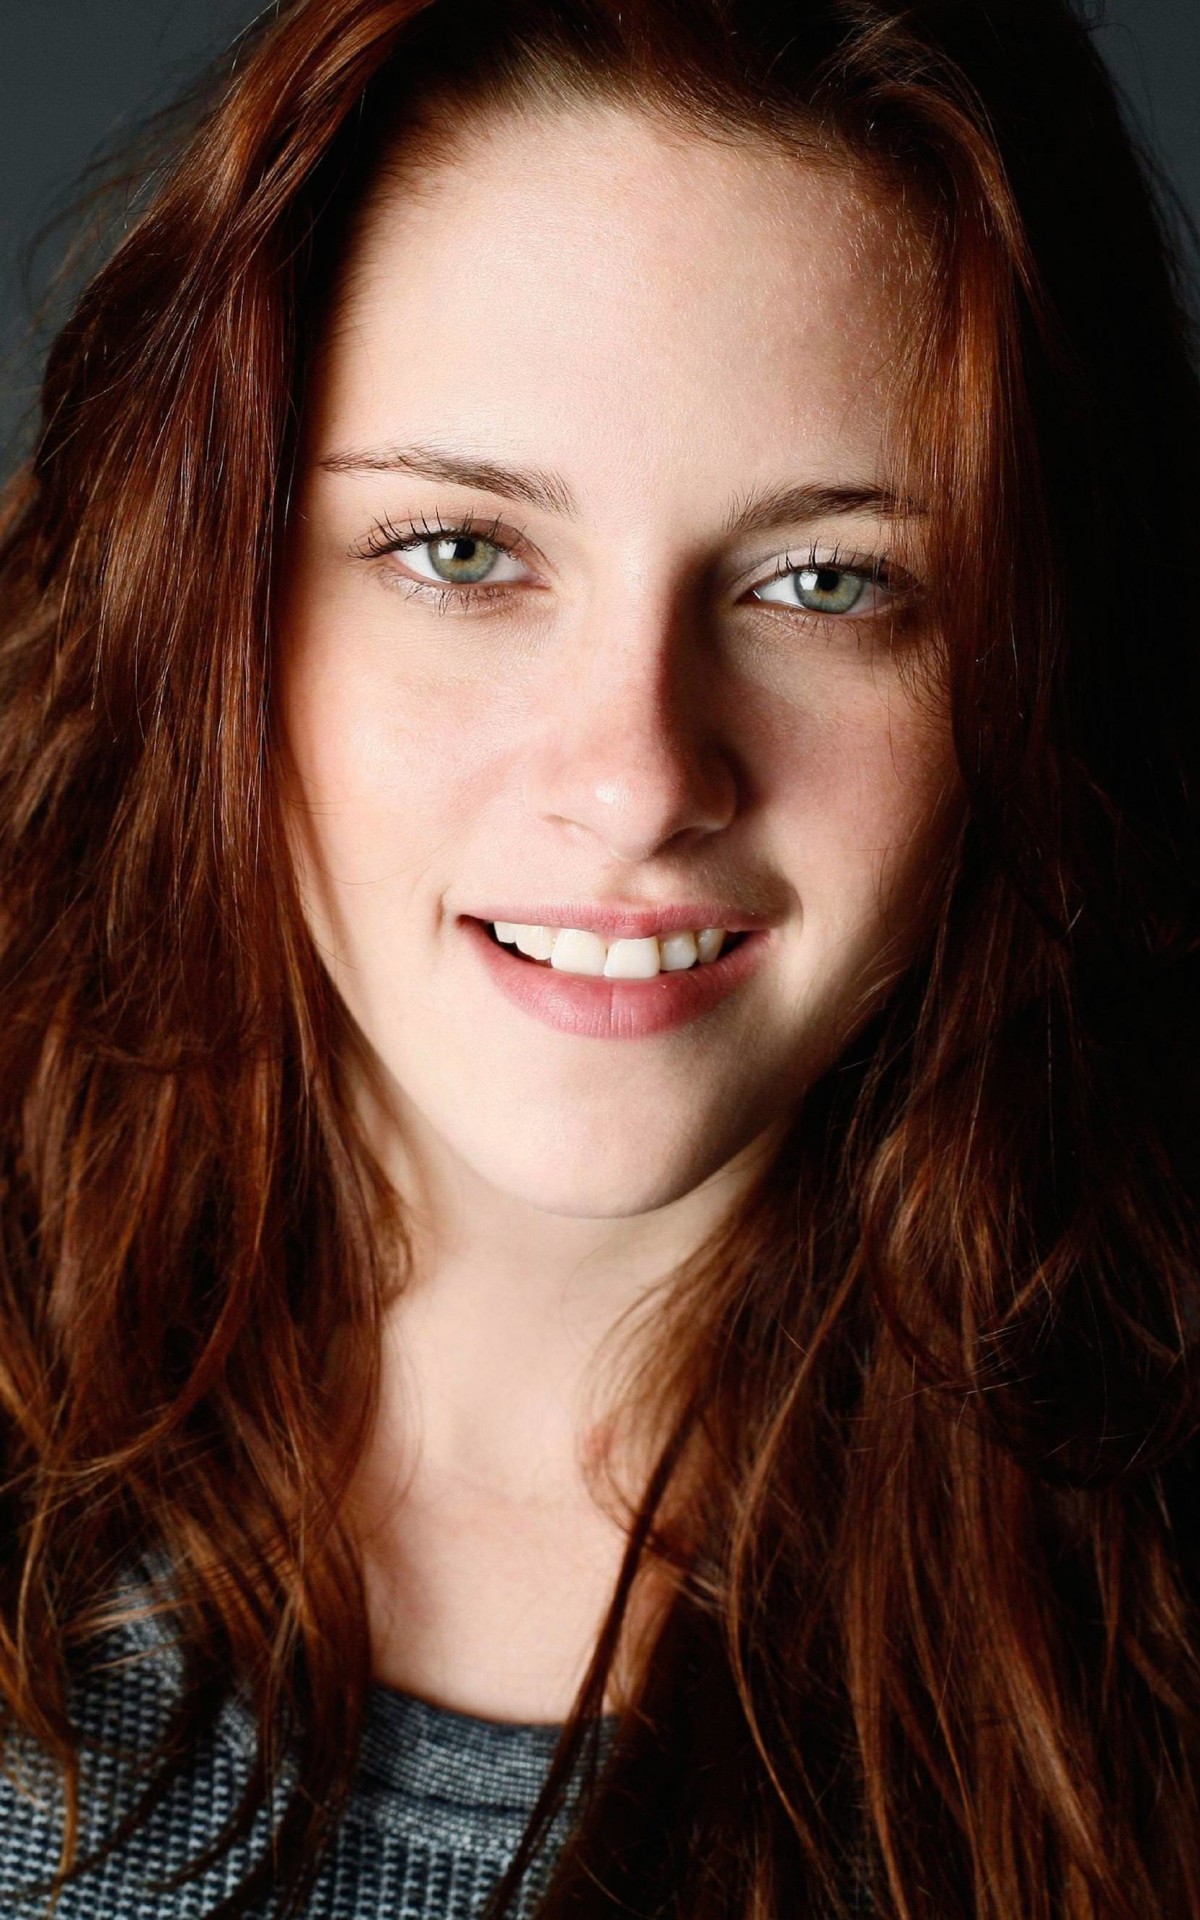 Kristen Stewart Portrait Wallpaper for Amazon Kindle Fire HDX